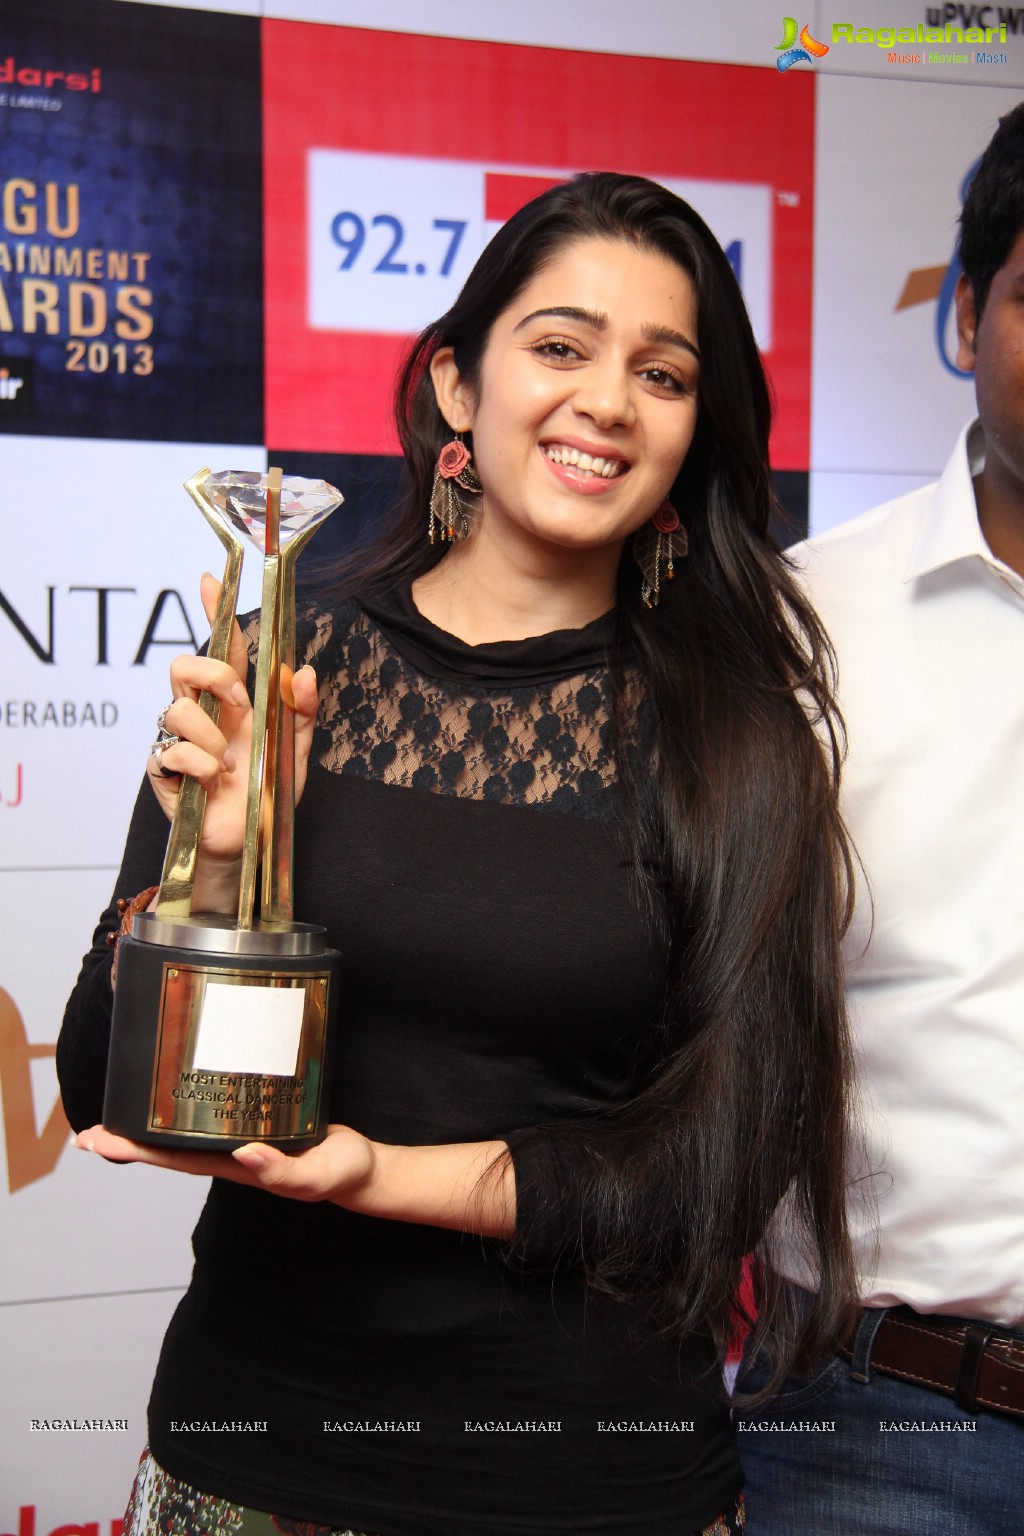 Margadarsi Big Telugu Entertainment Awards Press Meet